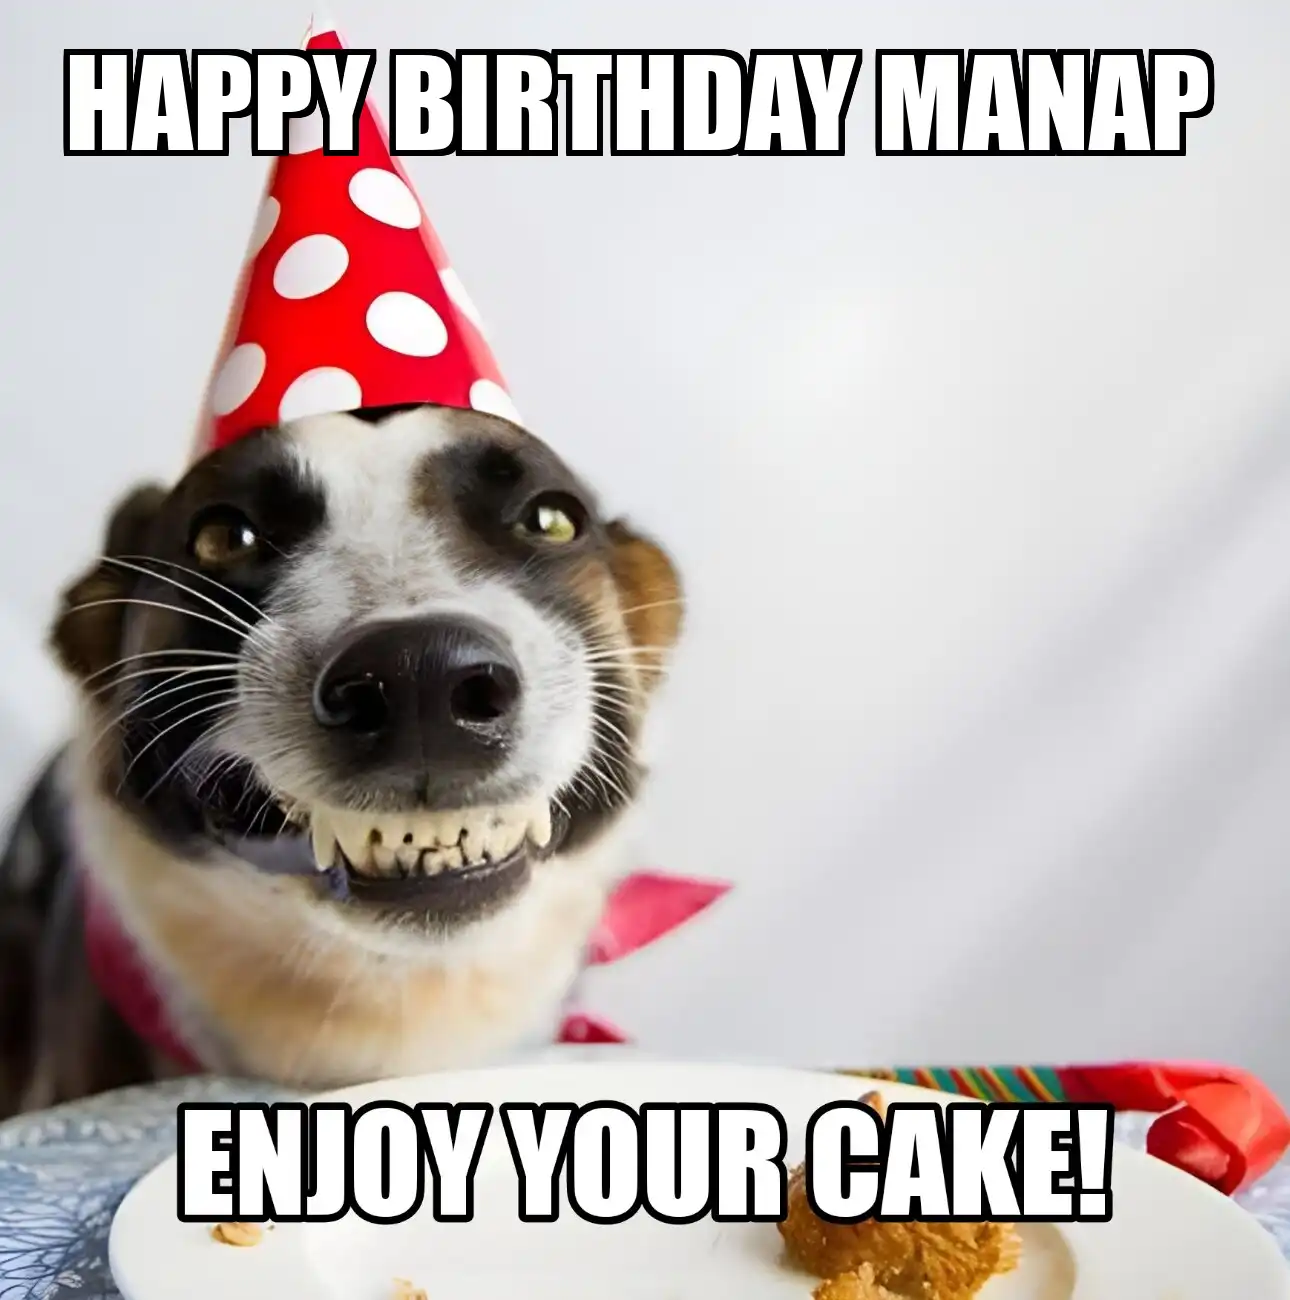 Happy Birthday Manap Enjoy Your Cake Dog Meme